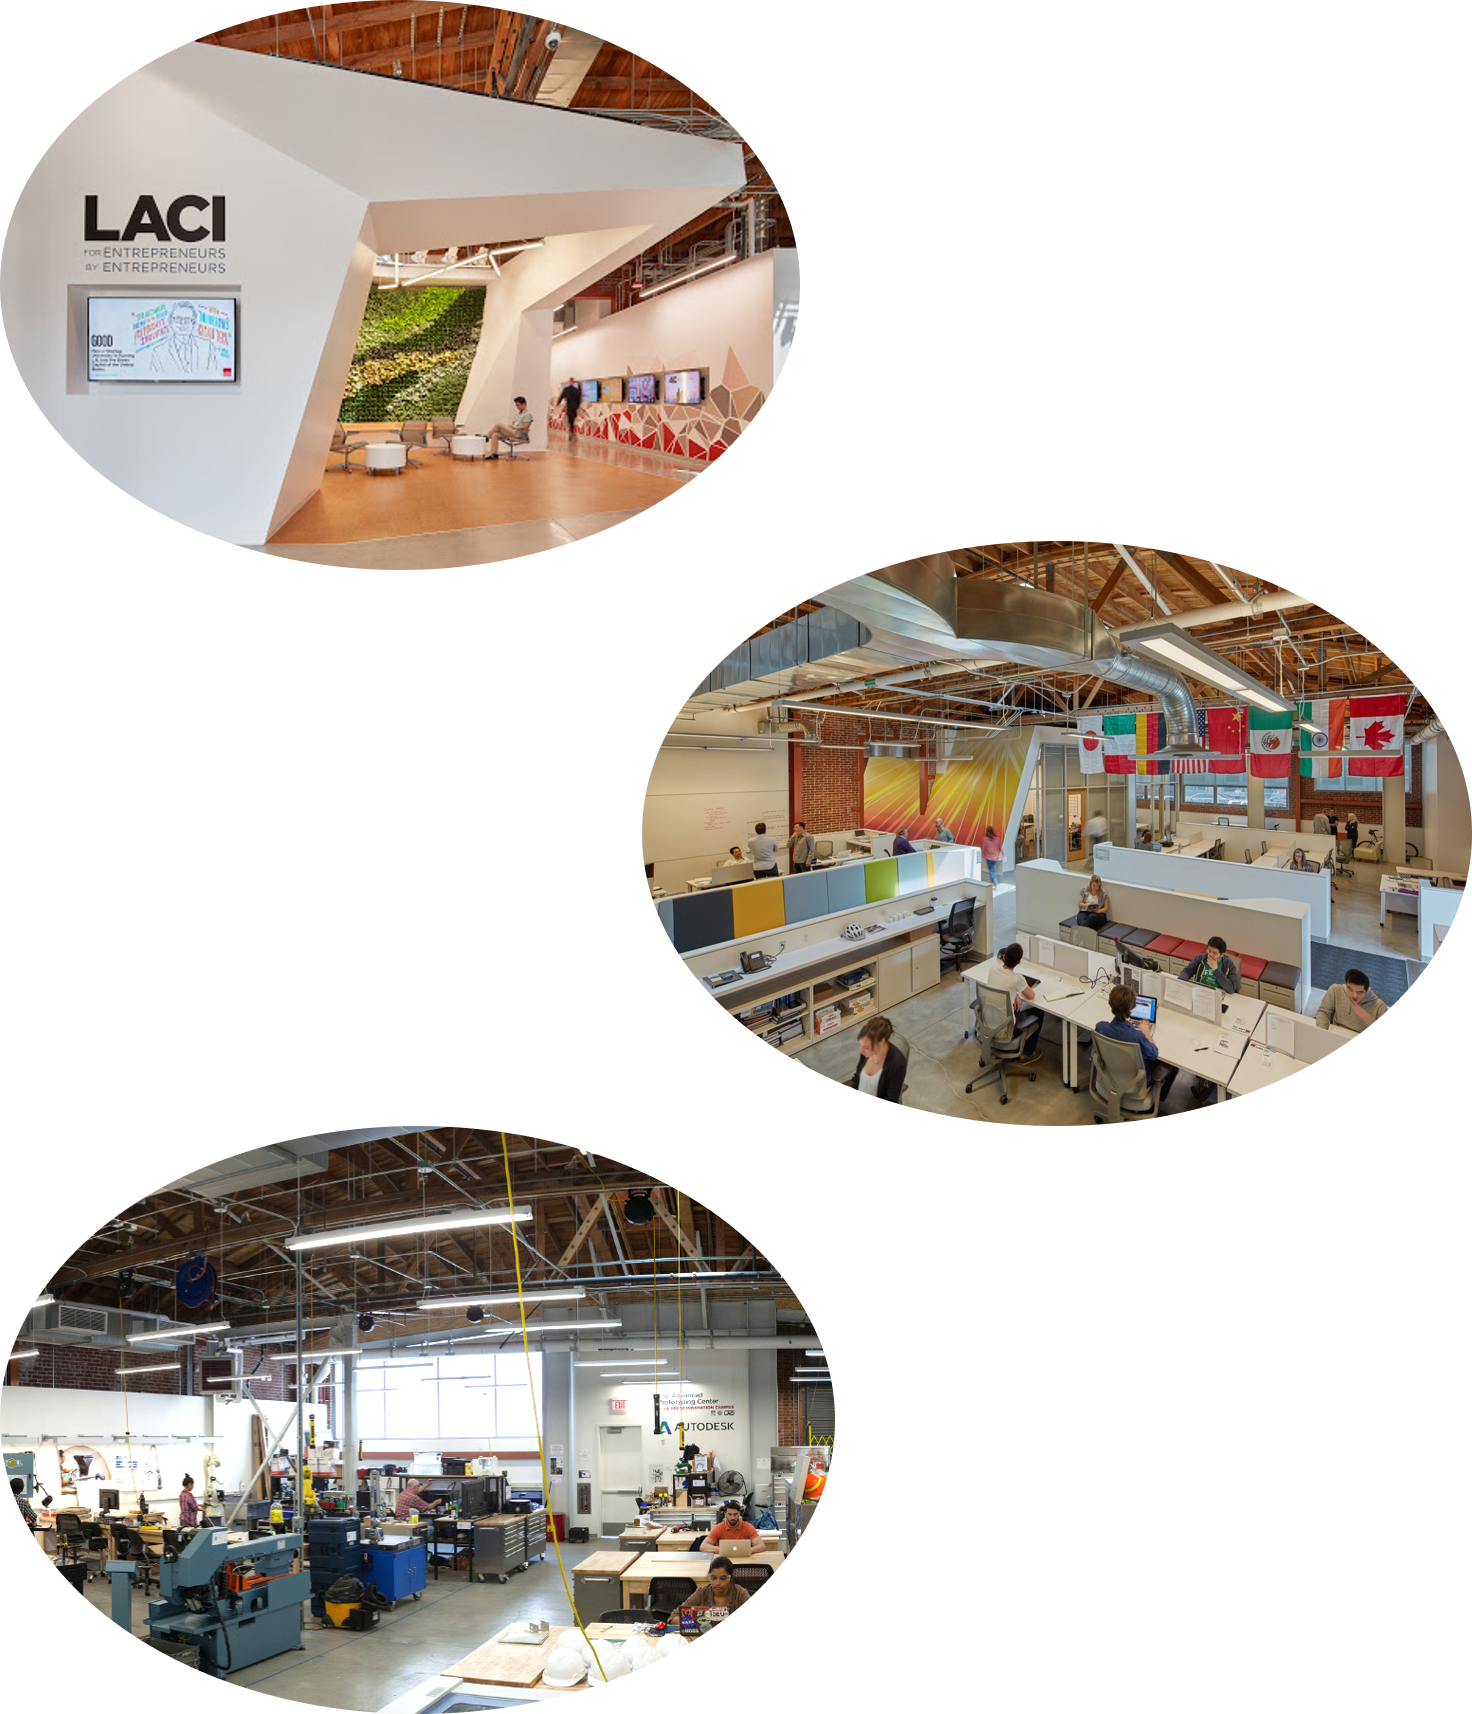 Los Angeles Cleantech Incubator (LACI) Housing Innovation Collaborative